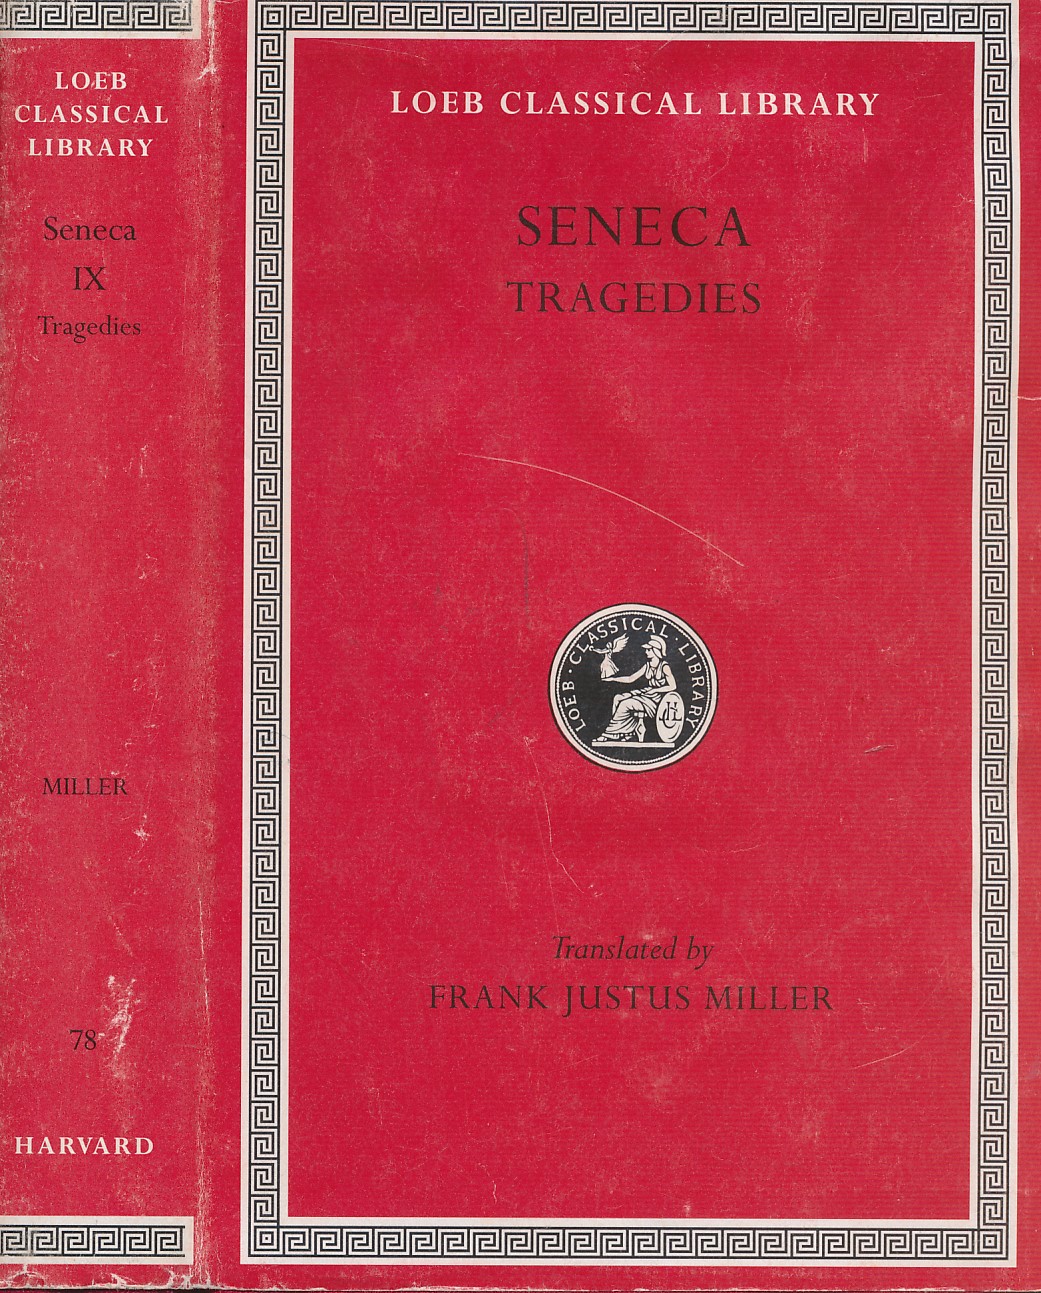 Seneca. Tragedies. Loeb Classical Library No.78.